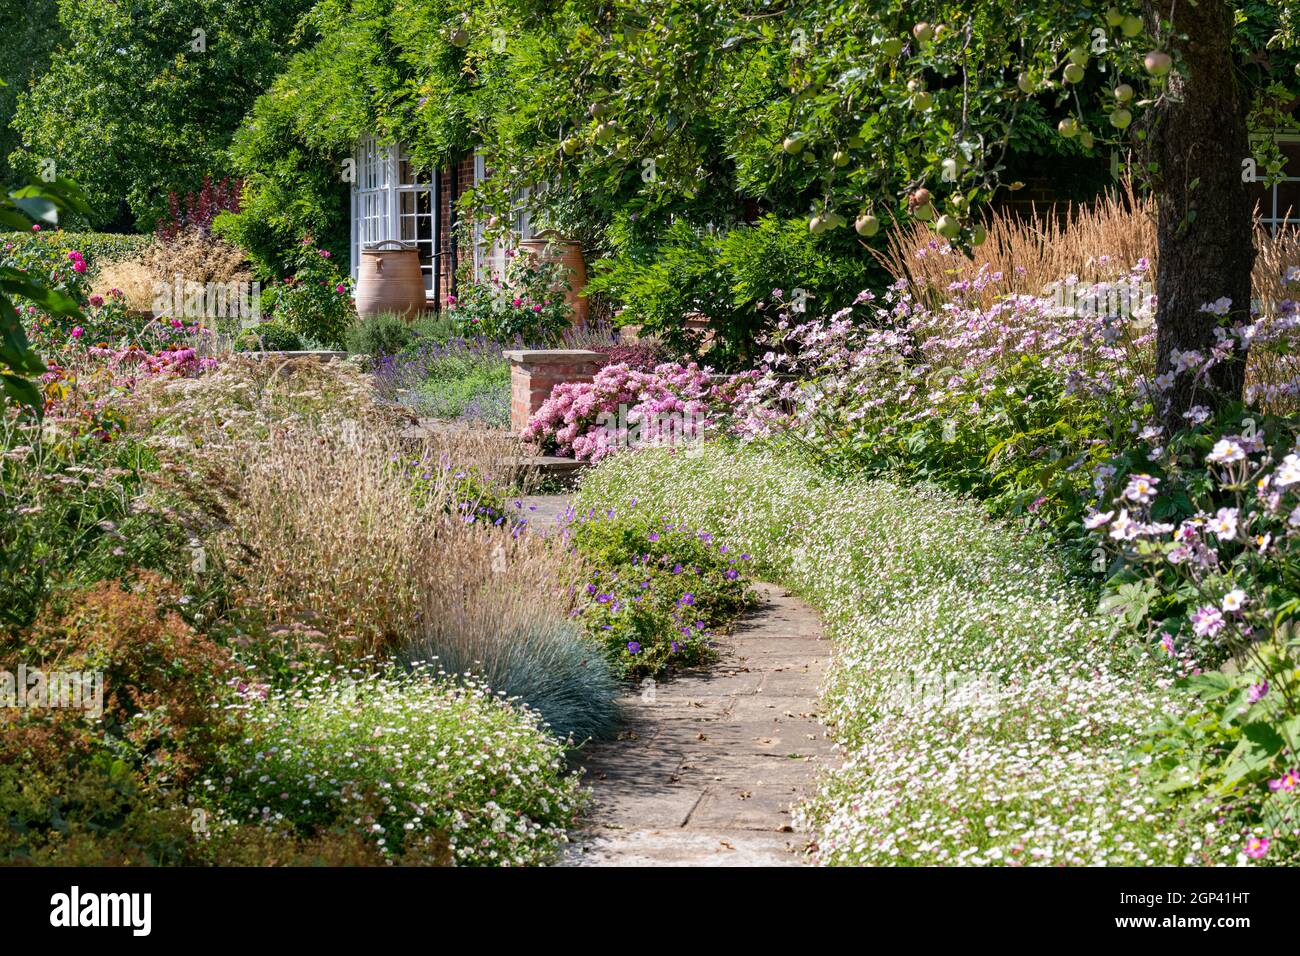 peaceful scene in an English country garden Stock Photo